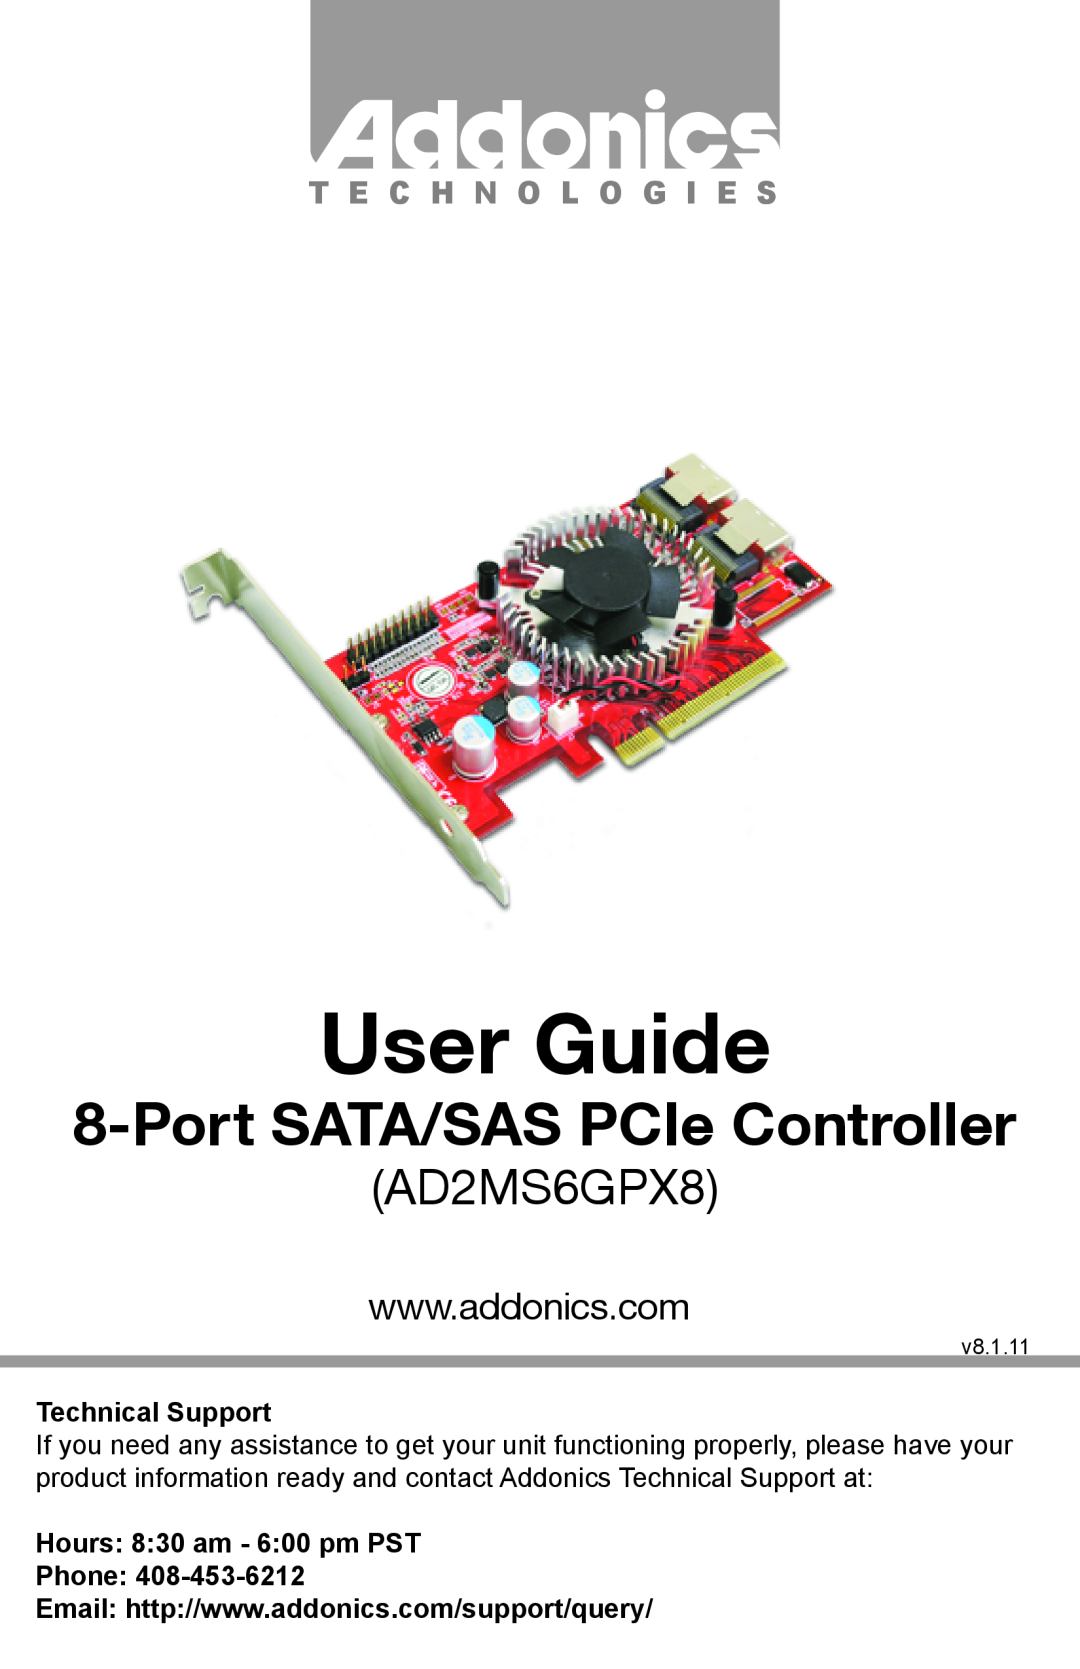 Addonics Technologies AD2MS6GPX8 manual User Guide, Port SATA/SAS PCIe Controller, T E C H N O L O G I E S 